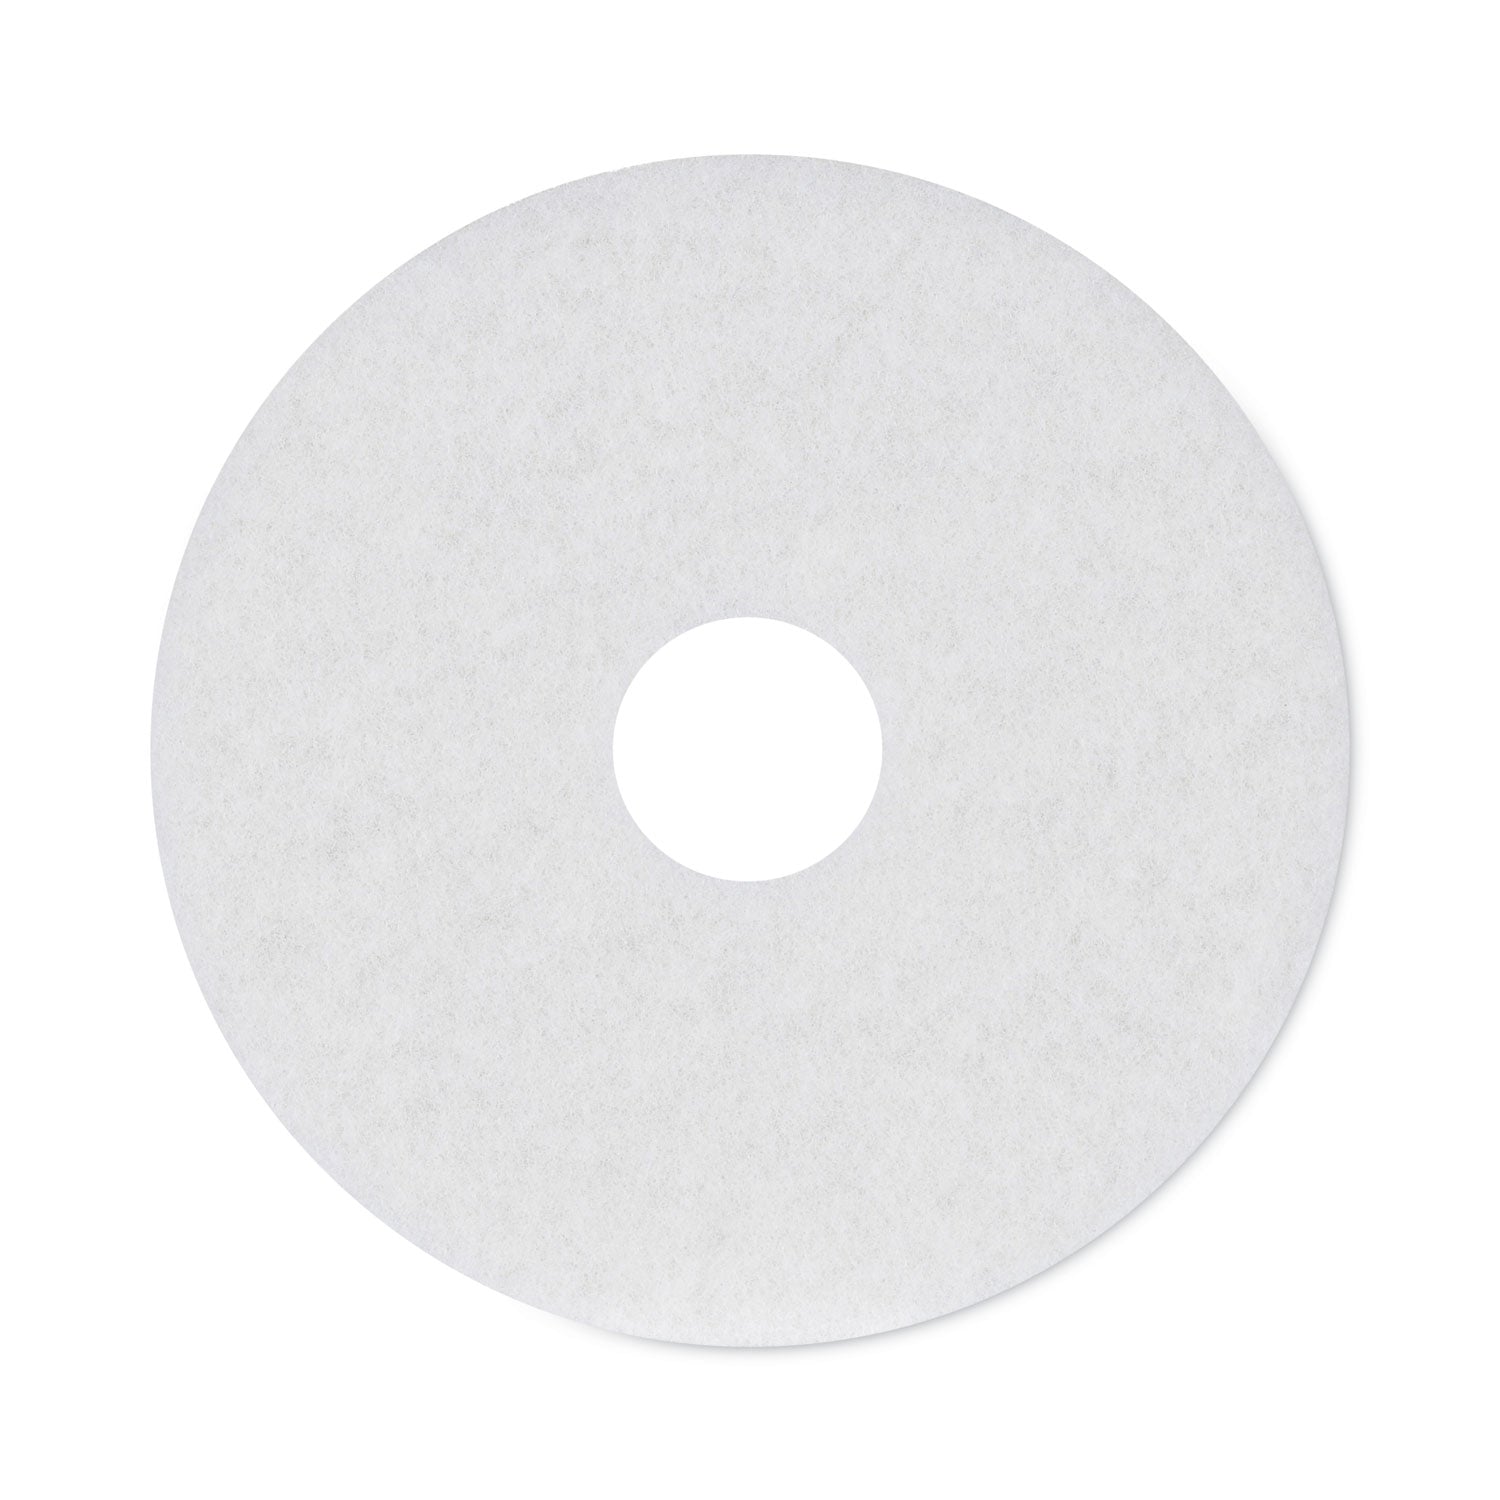 polishing-floor-pads-15-diameter-white-5-carton_bwk4015whi - 1